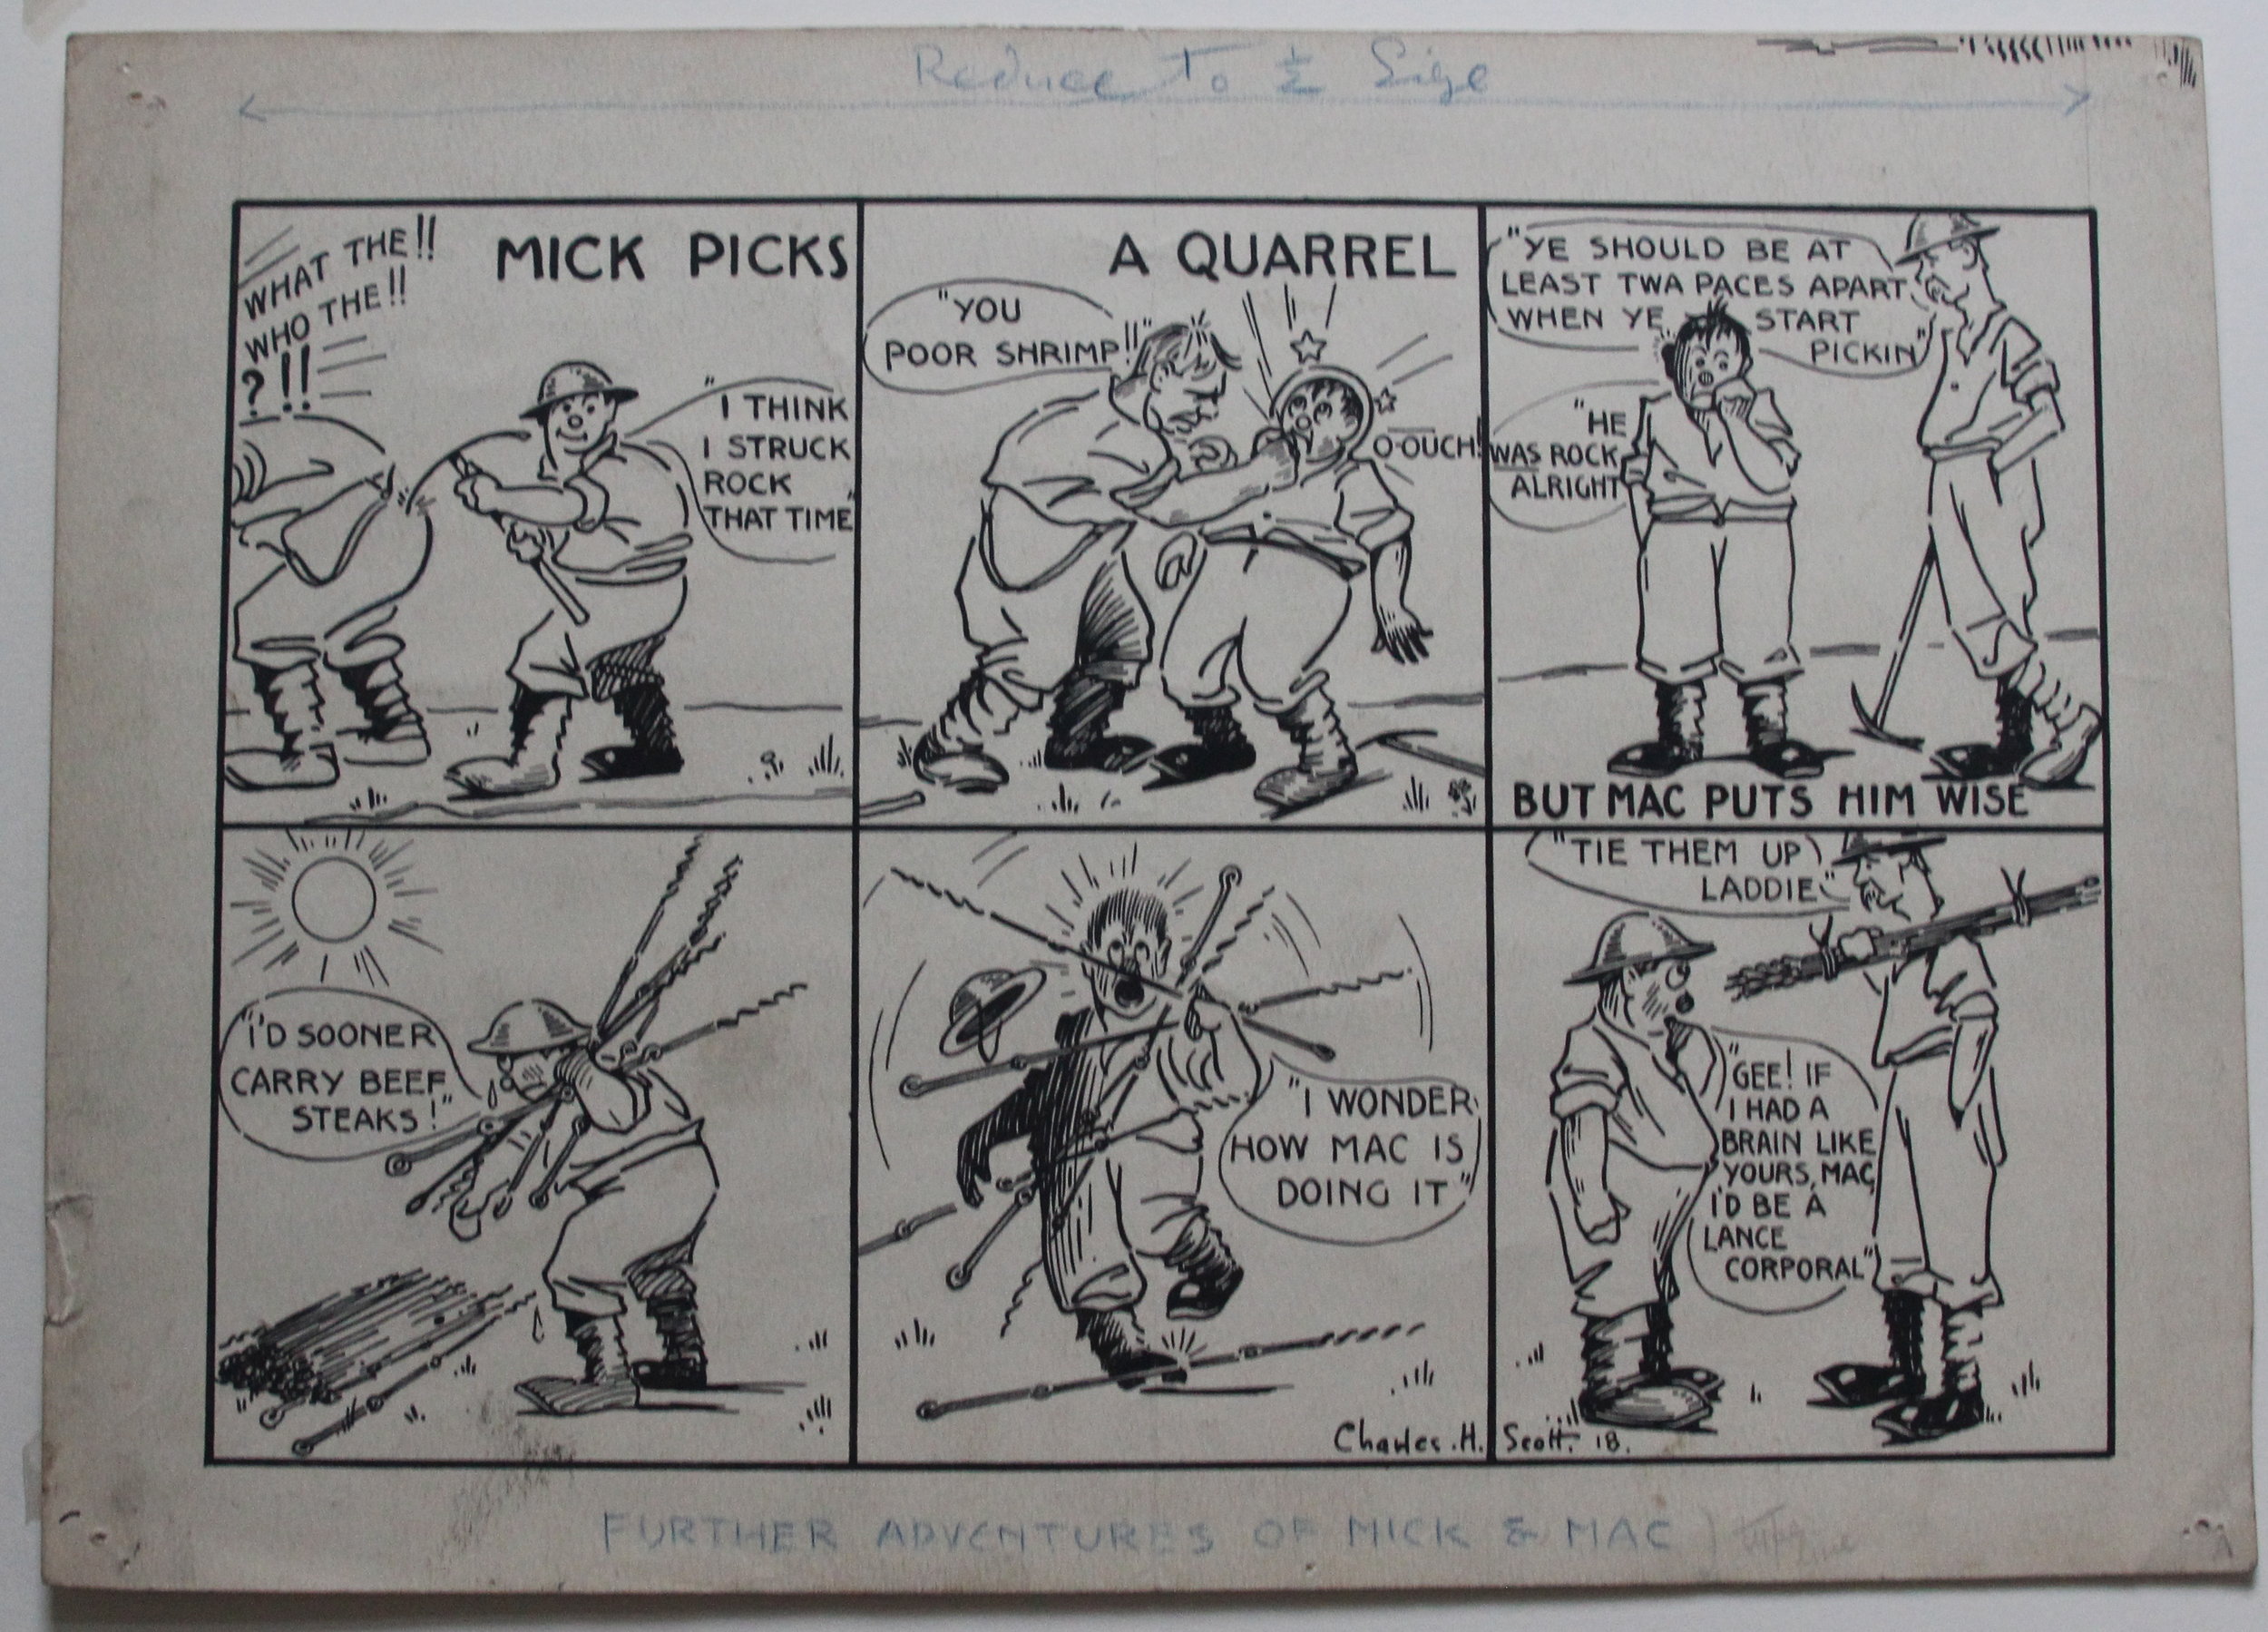 Charles H. Scott, Mick Picks a Quarrel, 1918